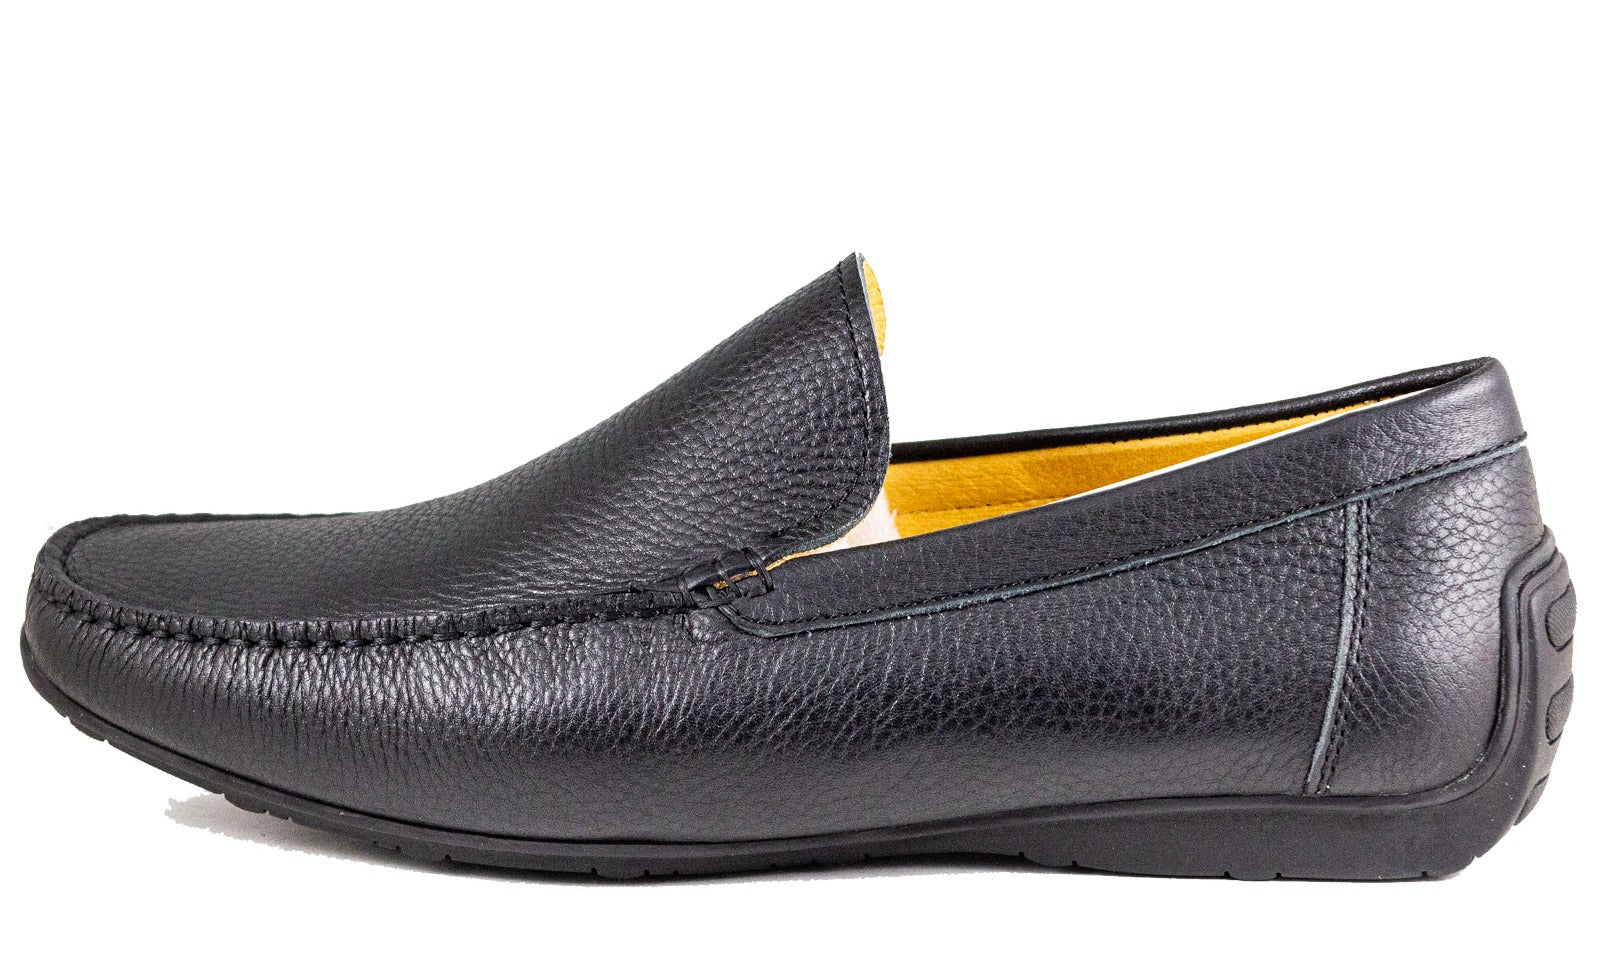 Bedrijfsomschrijving Invloed Krankzinnigheid Salo Men's Black Loafers Moccasins Shoes 405-03 - Men's Driving Shoe's —  Soulier Shoes